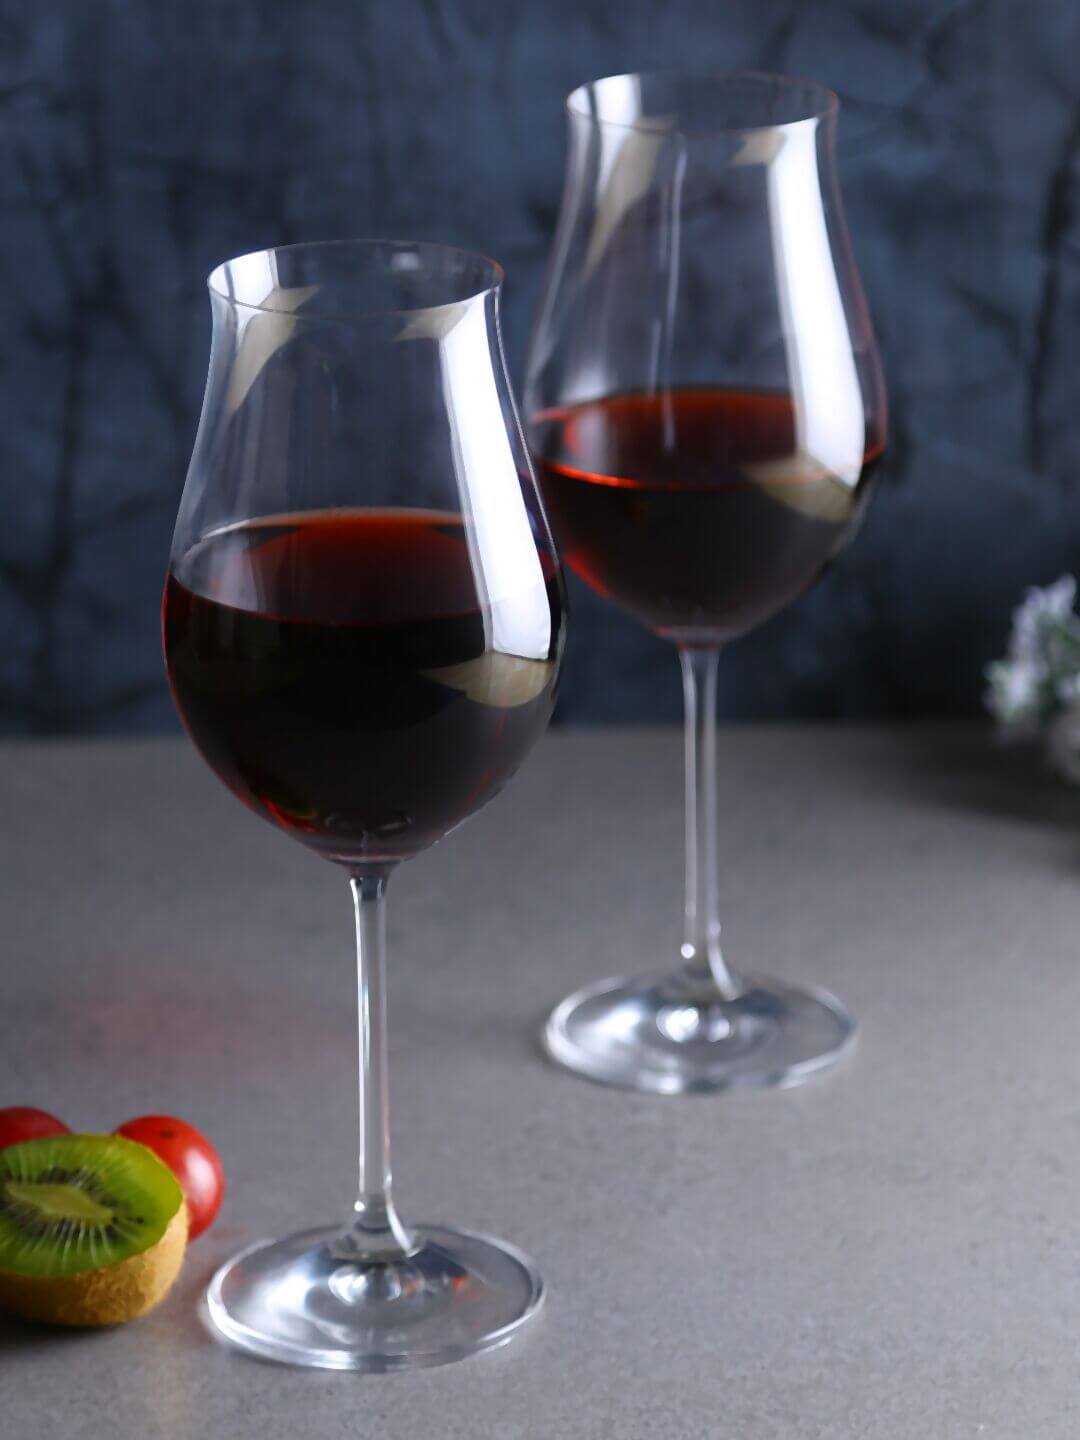 Bohemia Crystal Attimo Wine Glass Set, 420ml, Set of 6pcs, Transparent, Non Lead Crystal Glass | Wine Glass